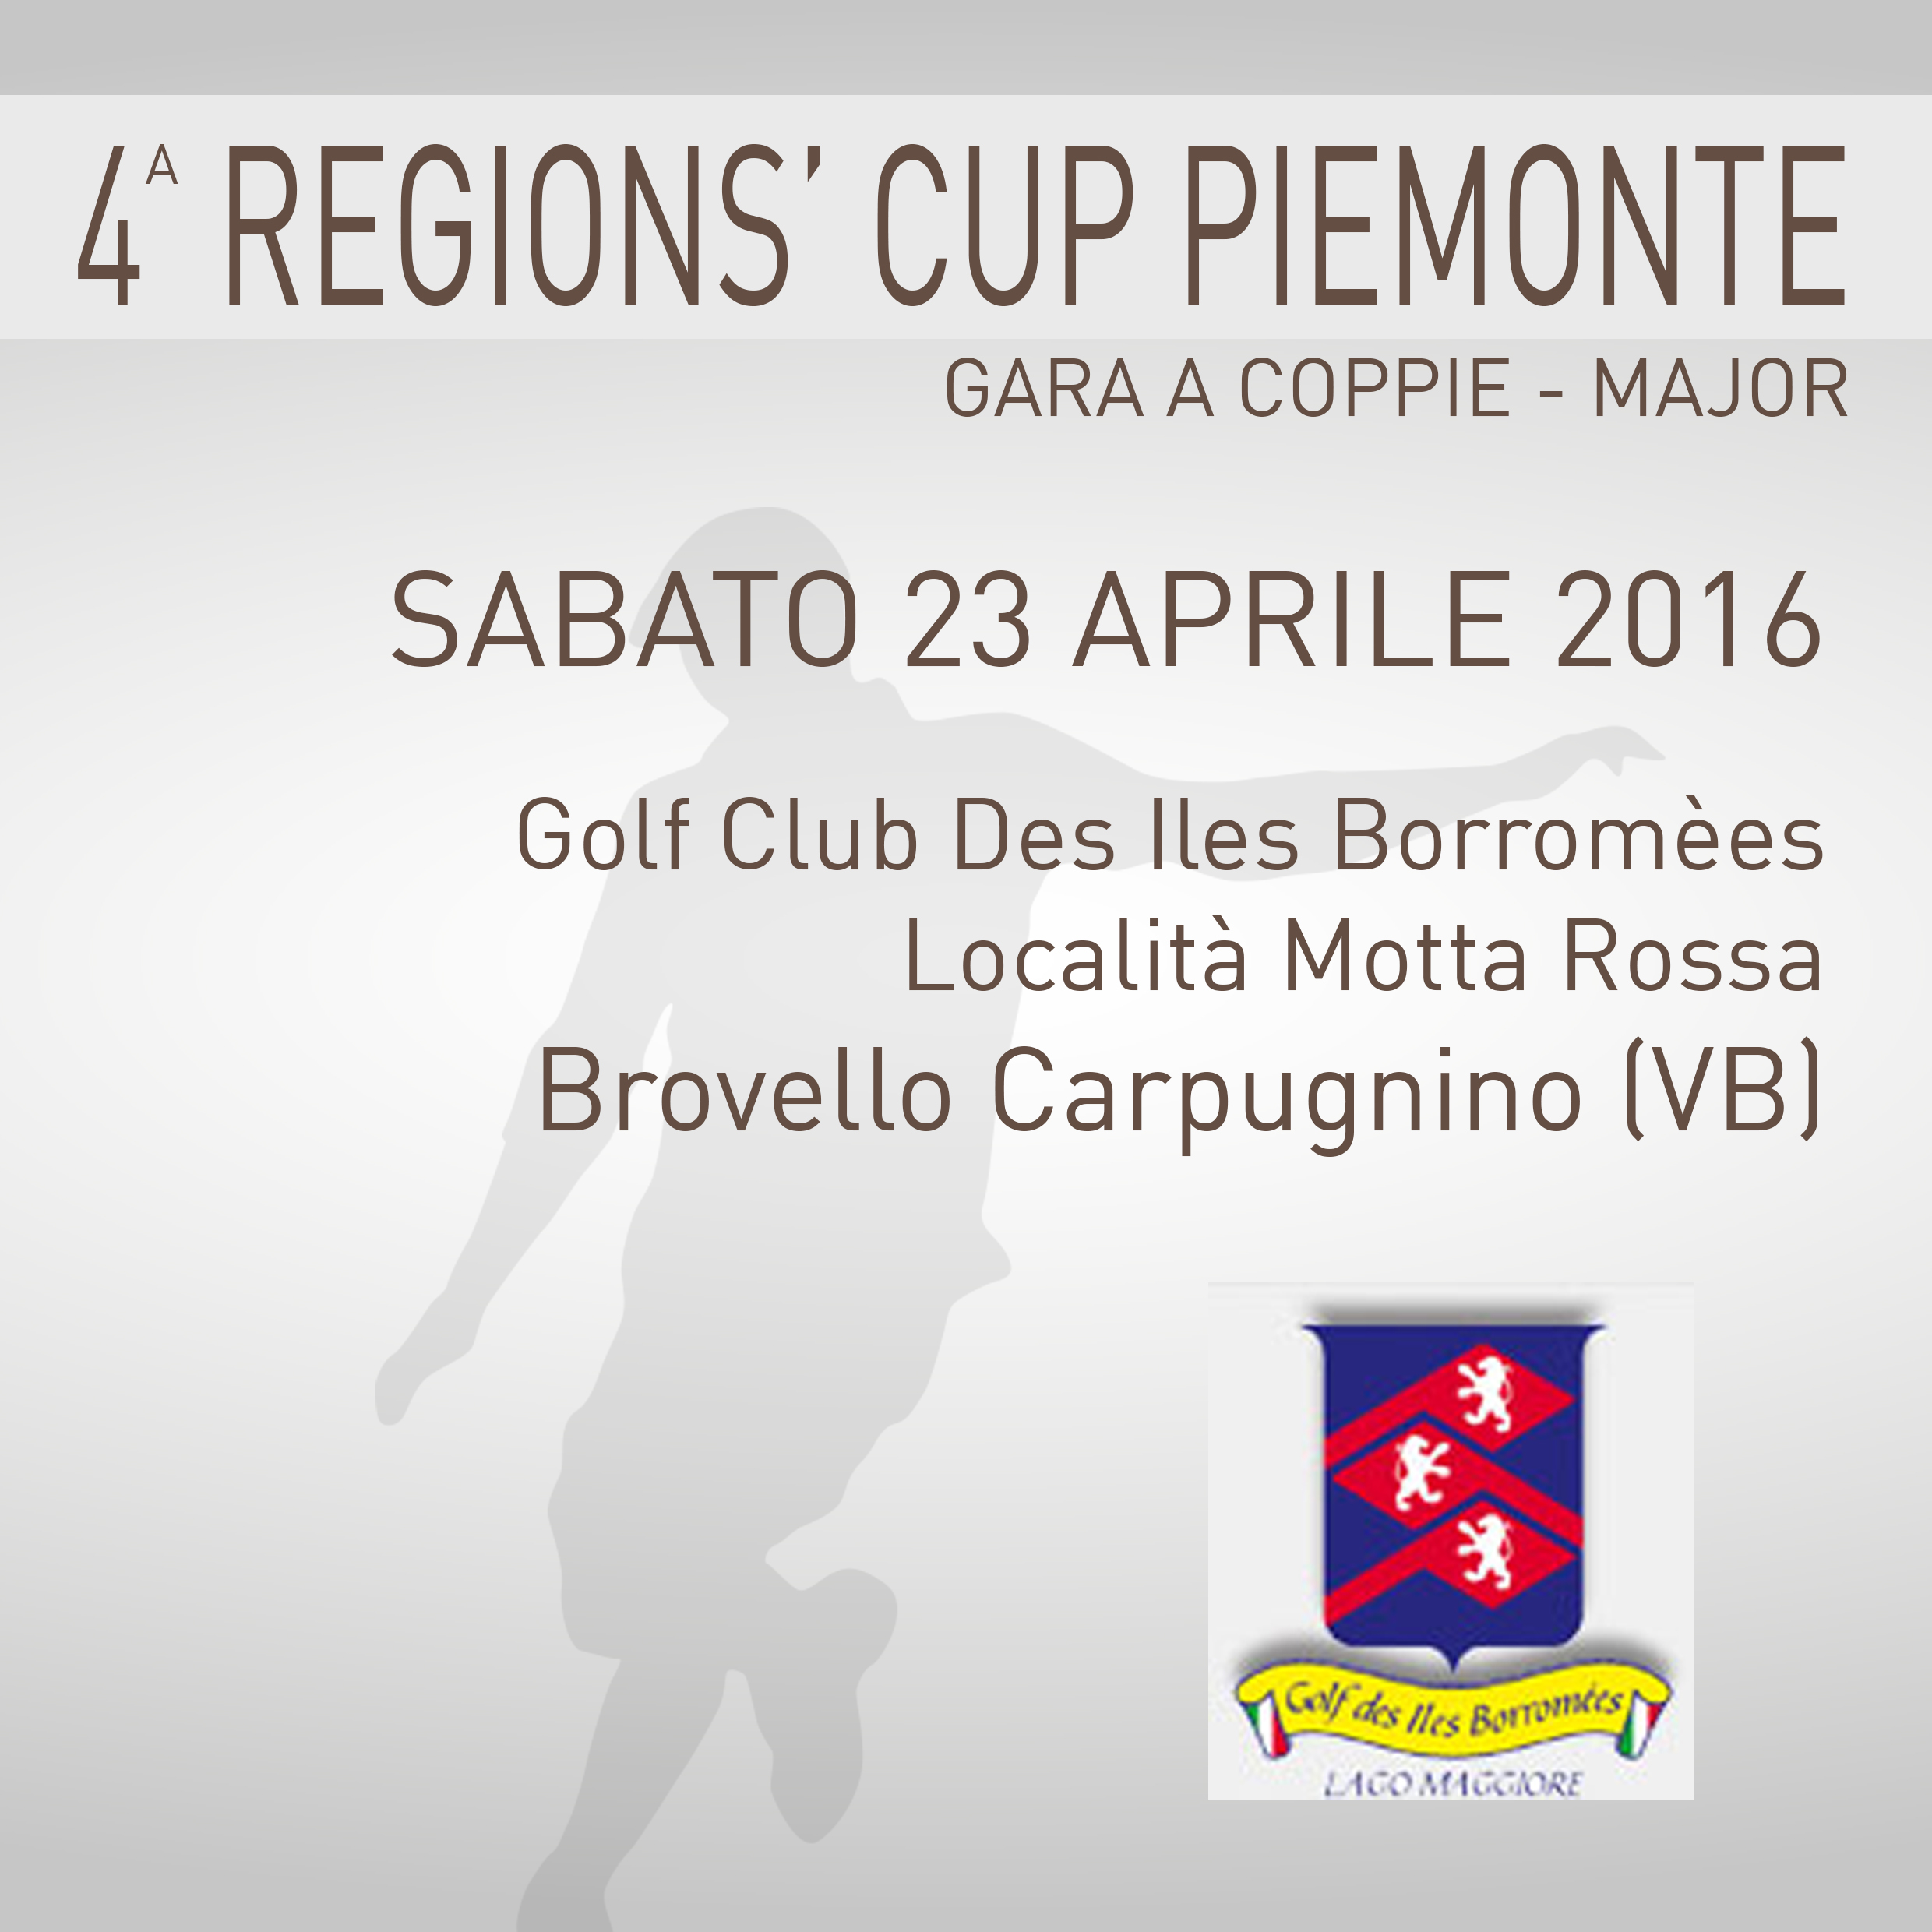 Locandina 4 tappa Regions' Cup Footgolf Piemonte 2015-2016 Gara a coppie Major Brovello Carpugnino VB sabato 23 aprile 2016 Negozio